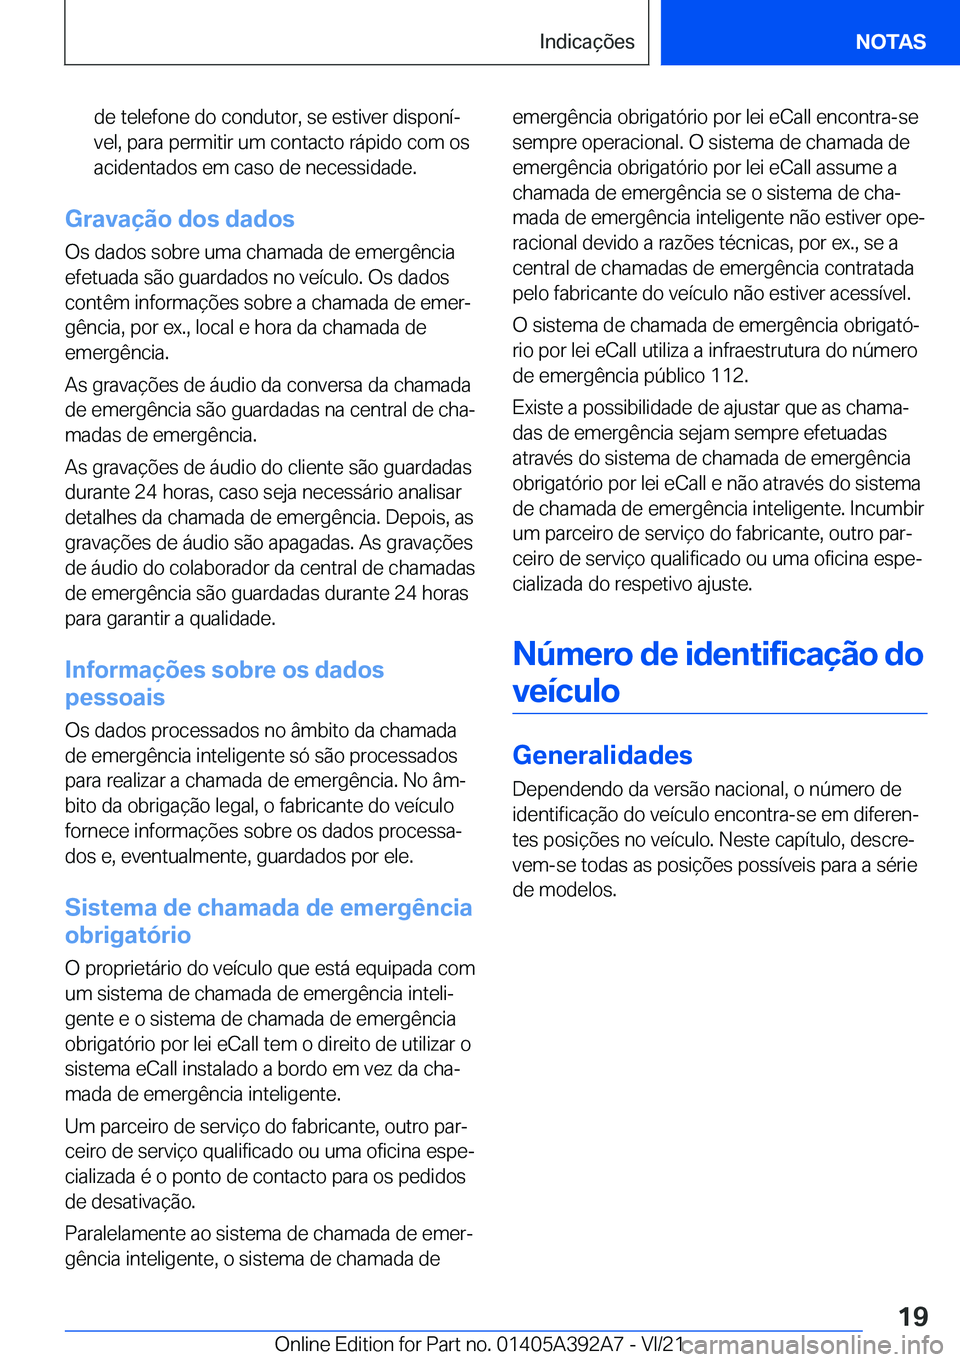 BMW 4 SERIES 2022  Manual do condutor (in Portuguese) �d�e��t�e�l�e�f�o�n�e��d�o��c�o�n�d�u�t�o�r�,��s�e��e�s�t�i�v�e�r��d�i�s�p�o�n�